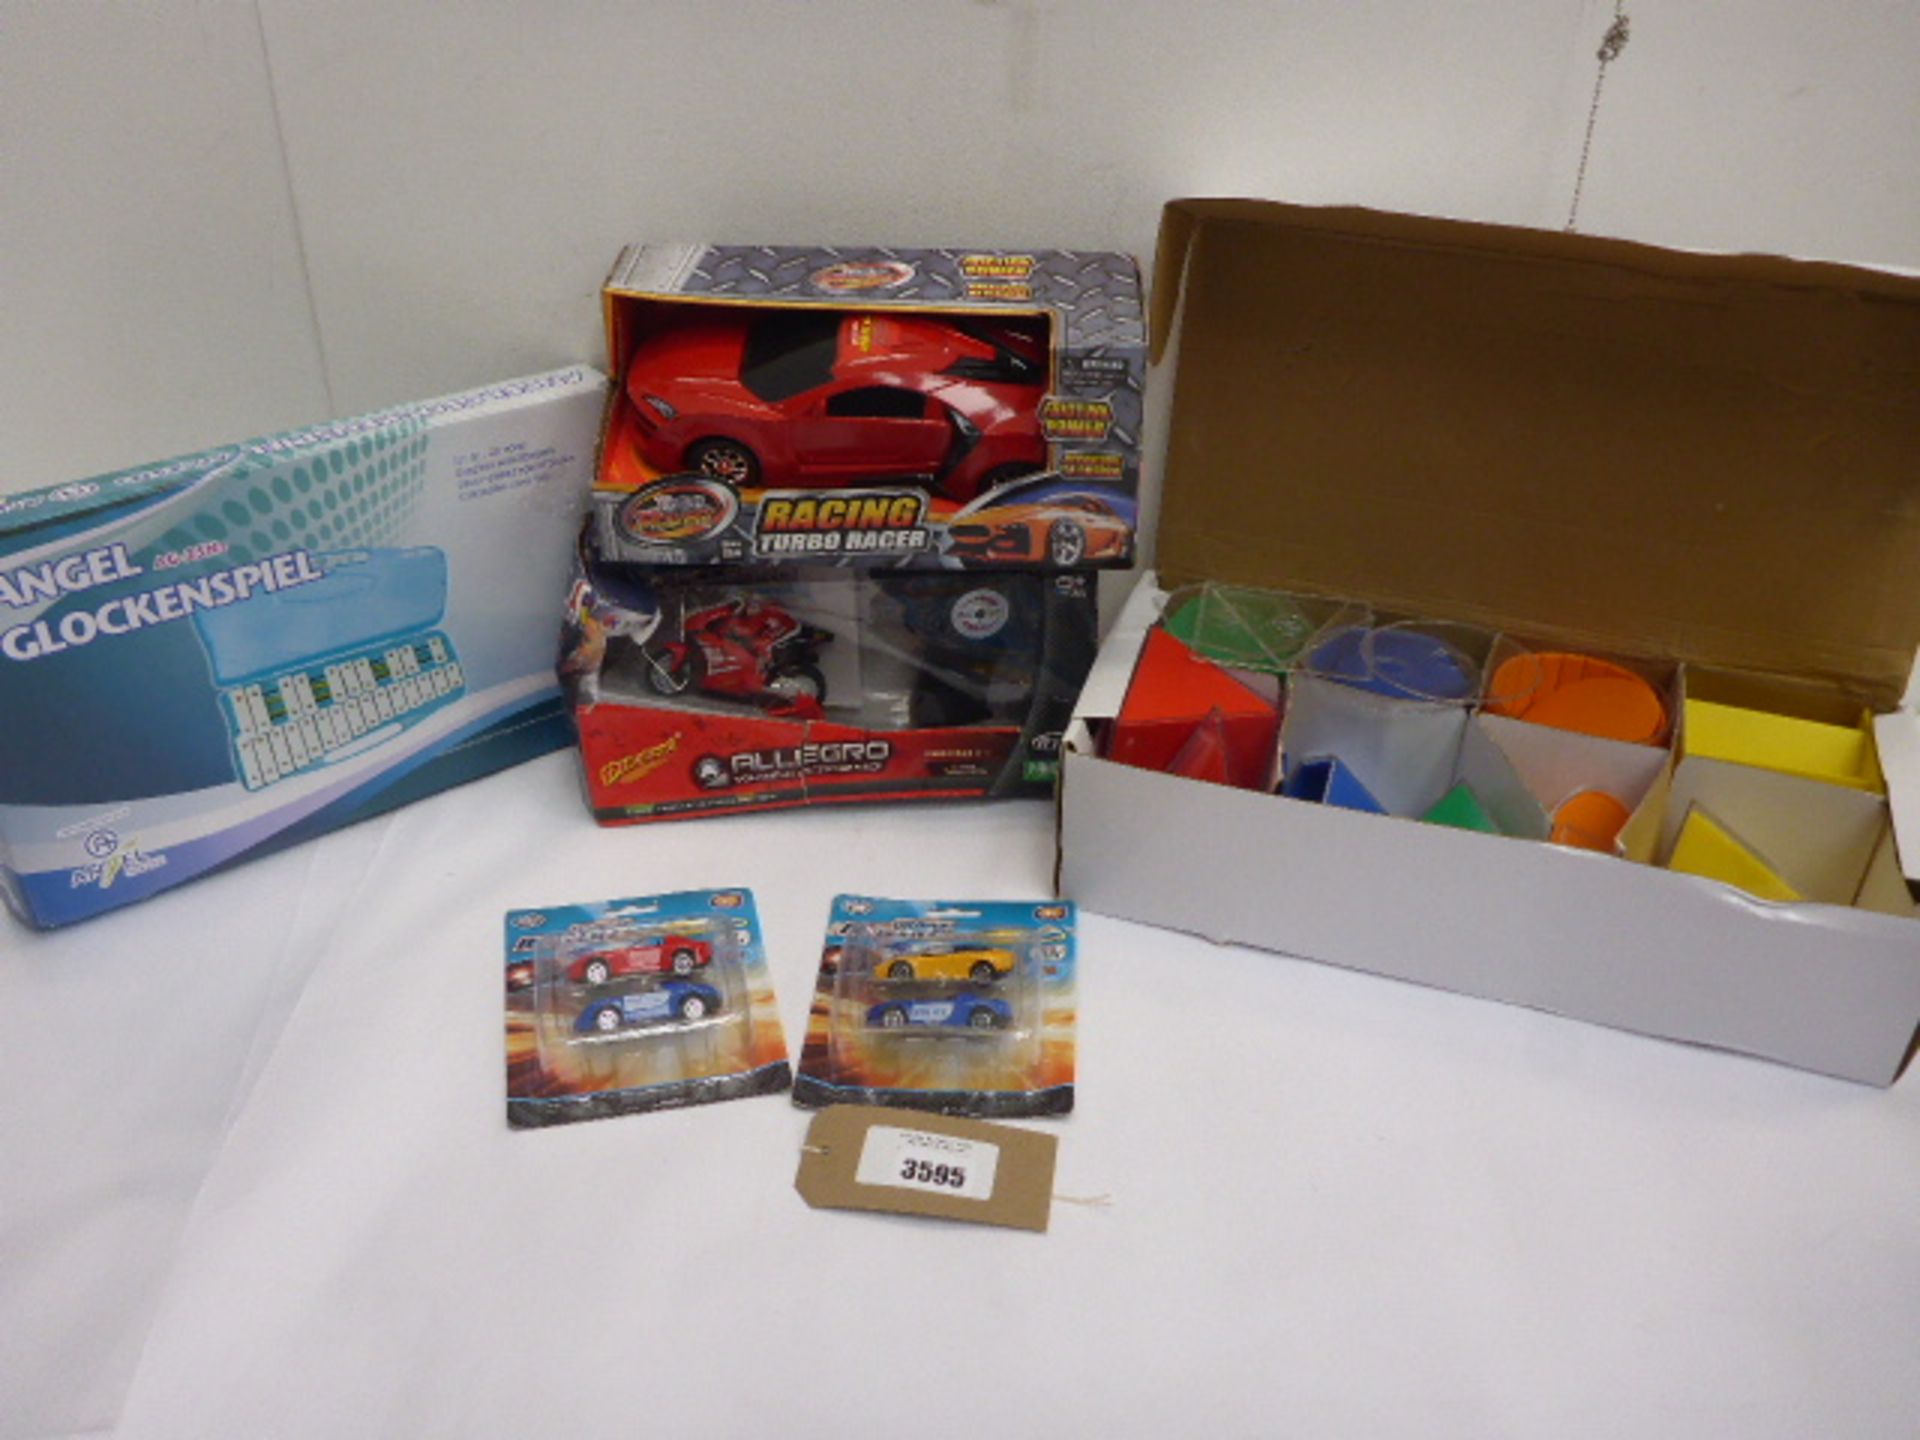 Angel Glockenspiel, r/c bike, Racing turbo car, Urban Blazer model cars and colour and shape game